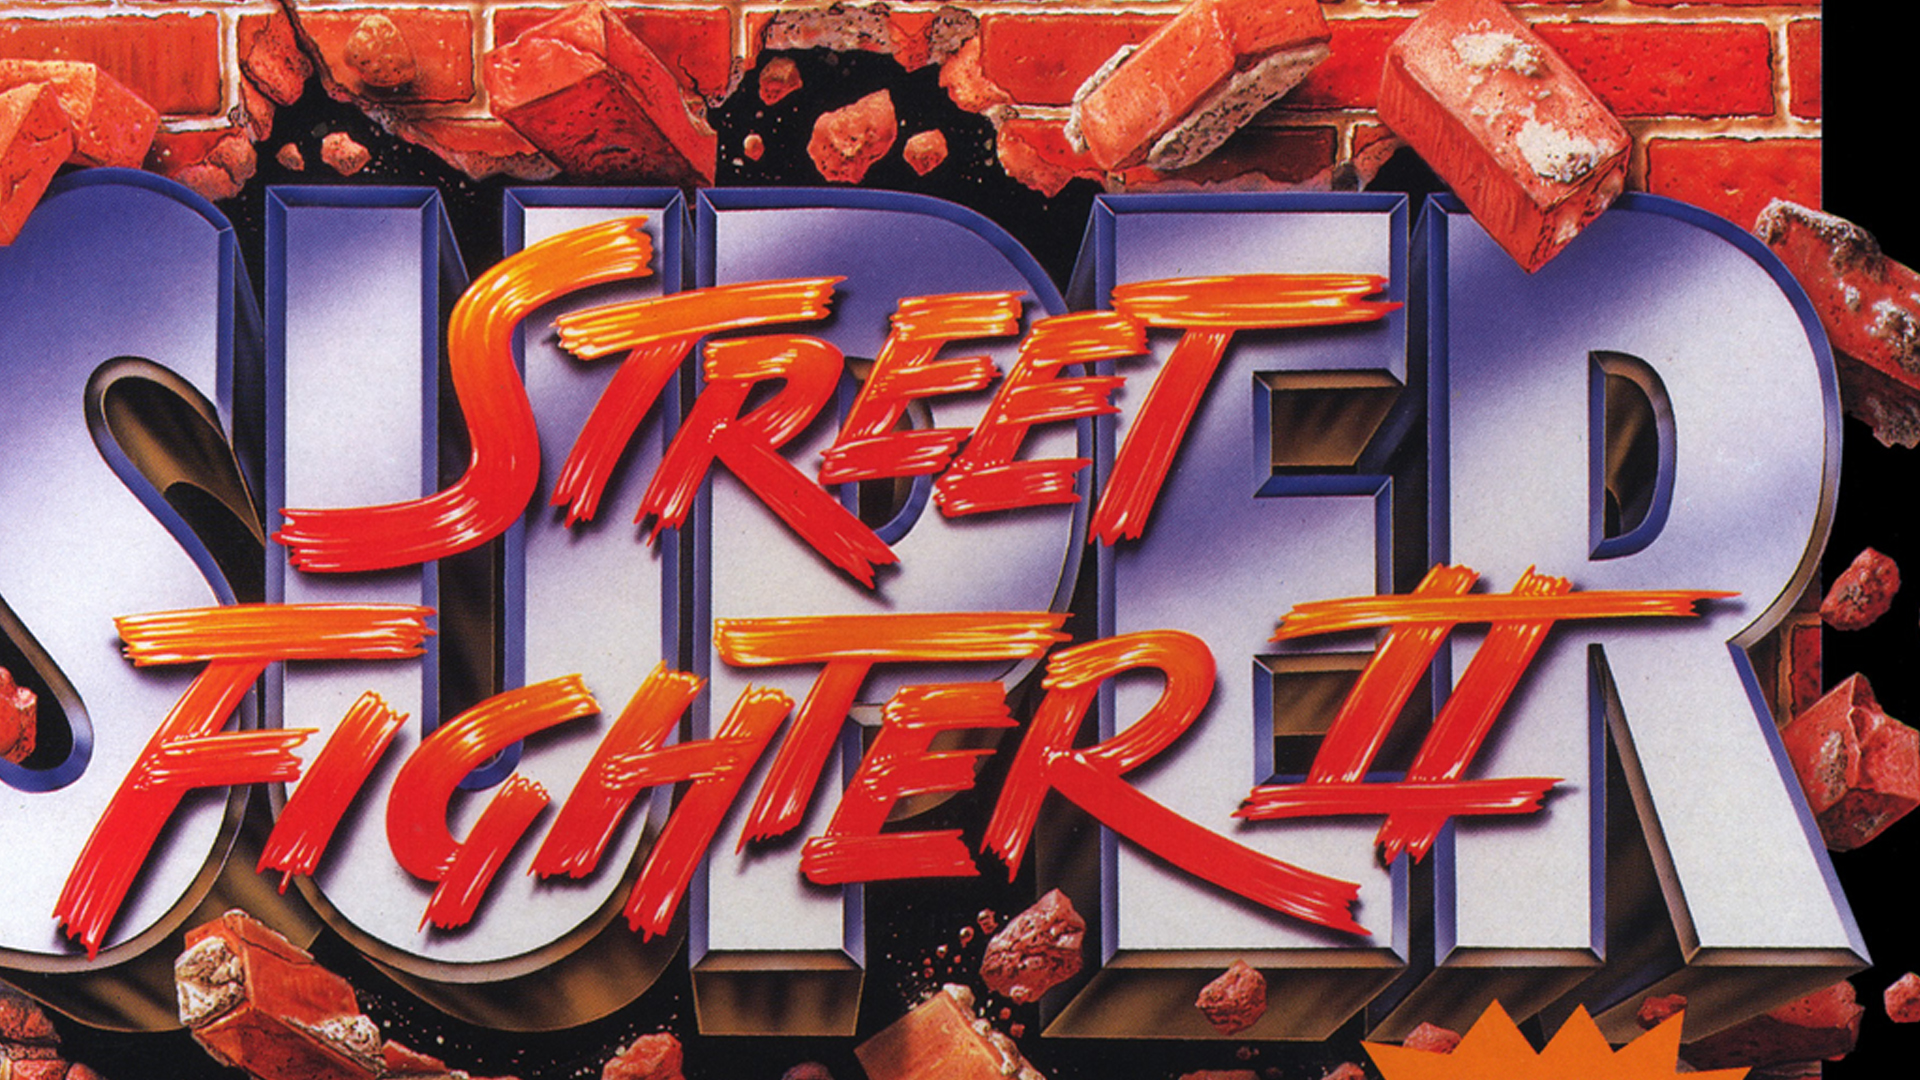 Super Street Fighter II HD Wallpapers